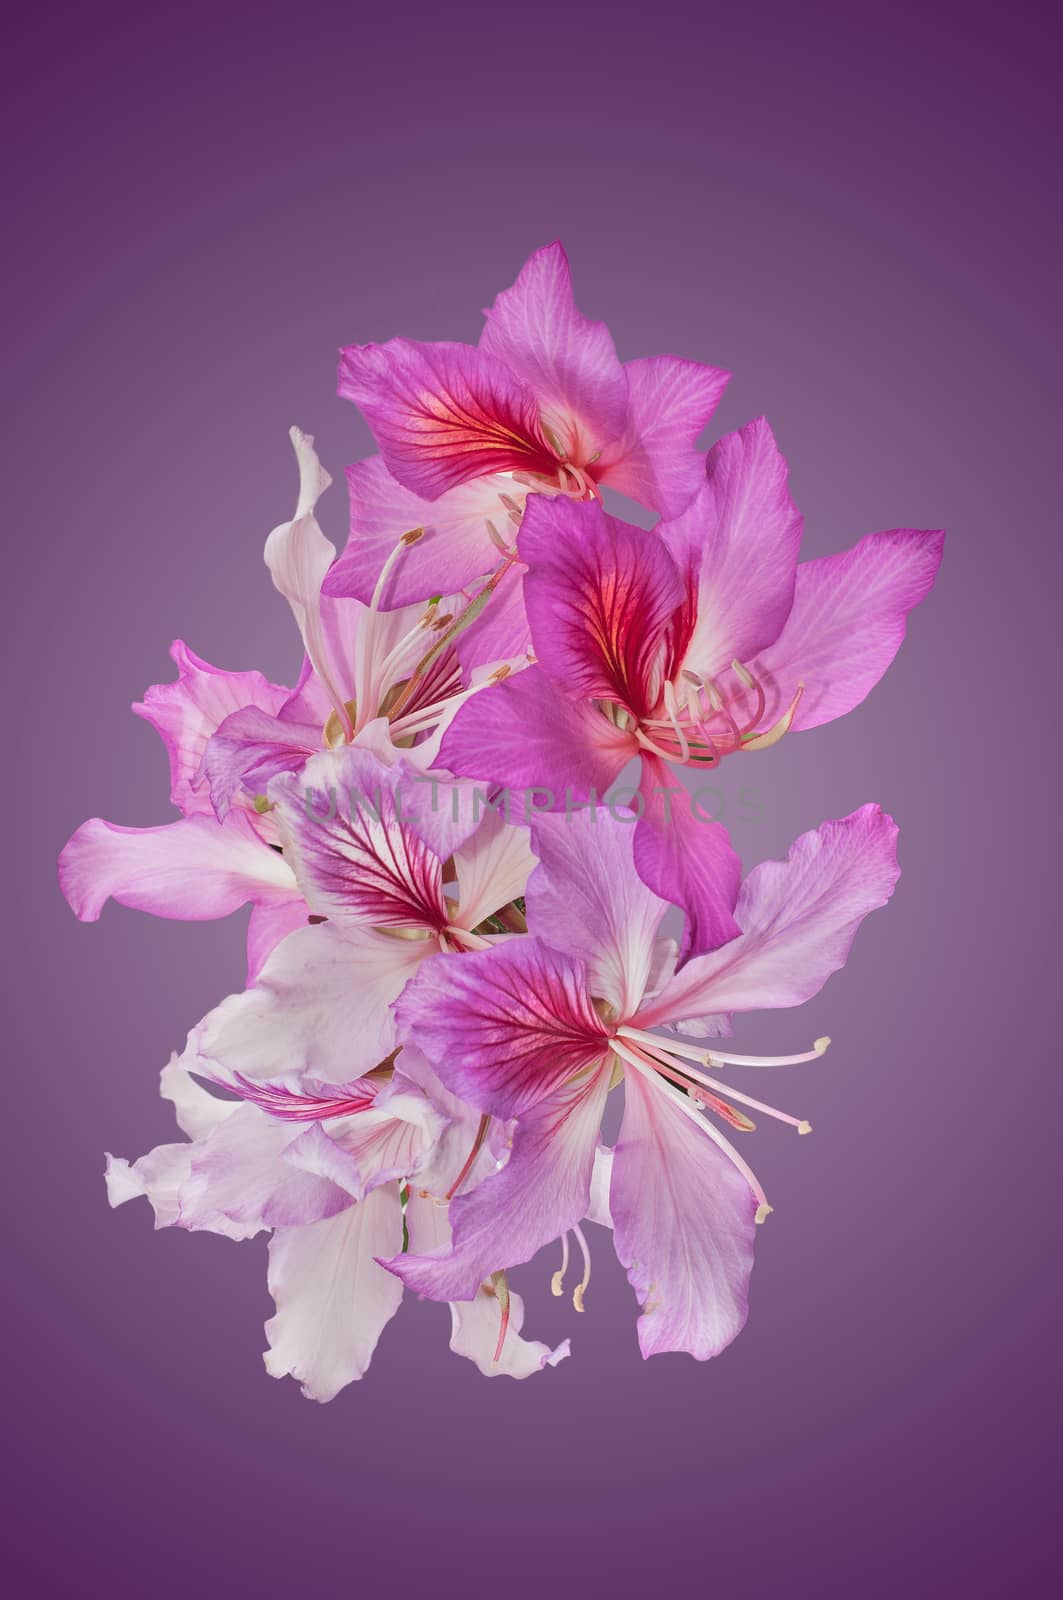 Bahuinia Blakeana flowers by danielbarquero